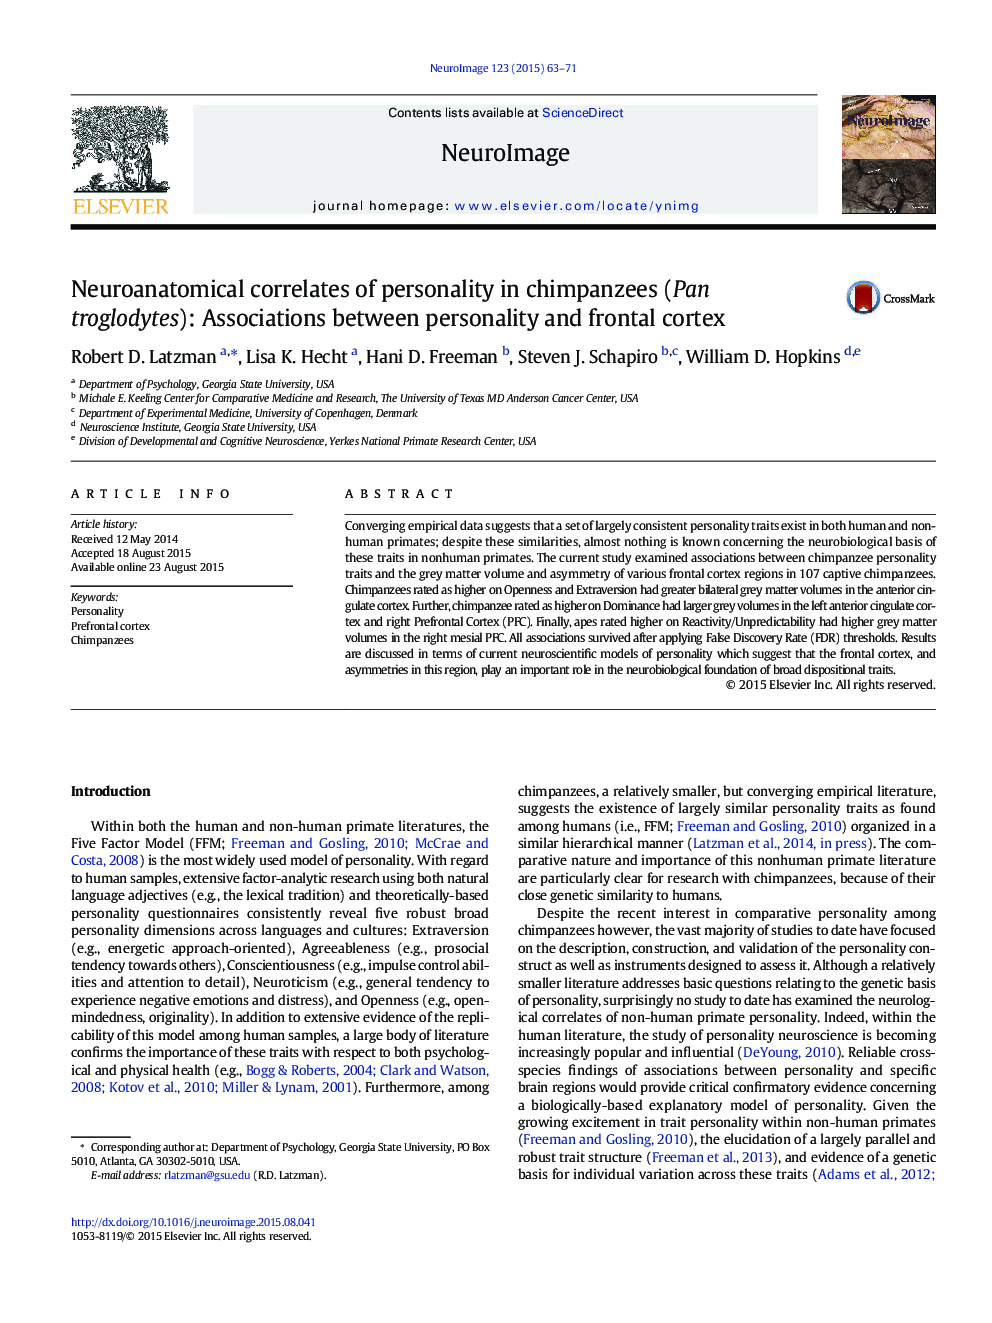 Neuroanatomical correlates of personality in chimpanzees (Pan troglodytes): Associations between personality and frontal cortex